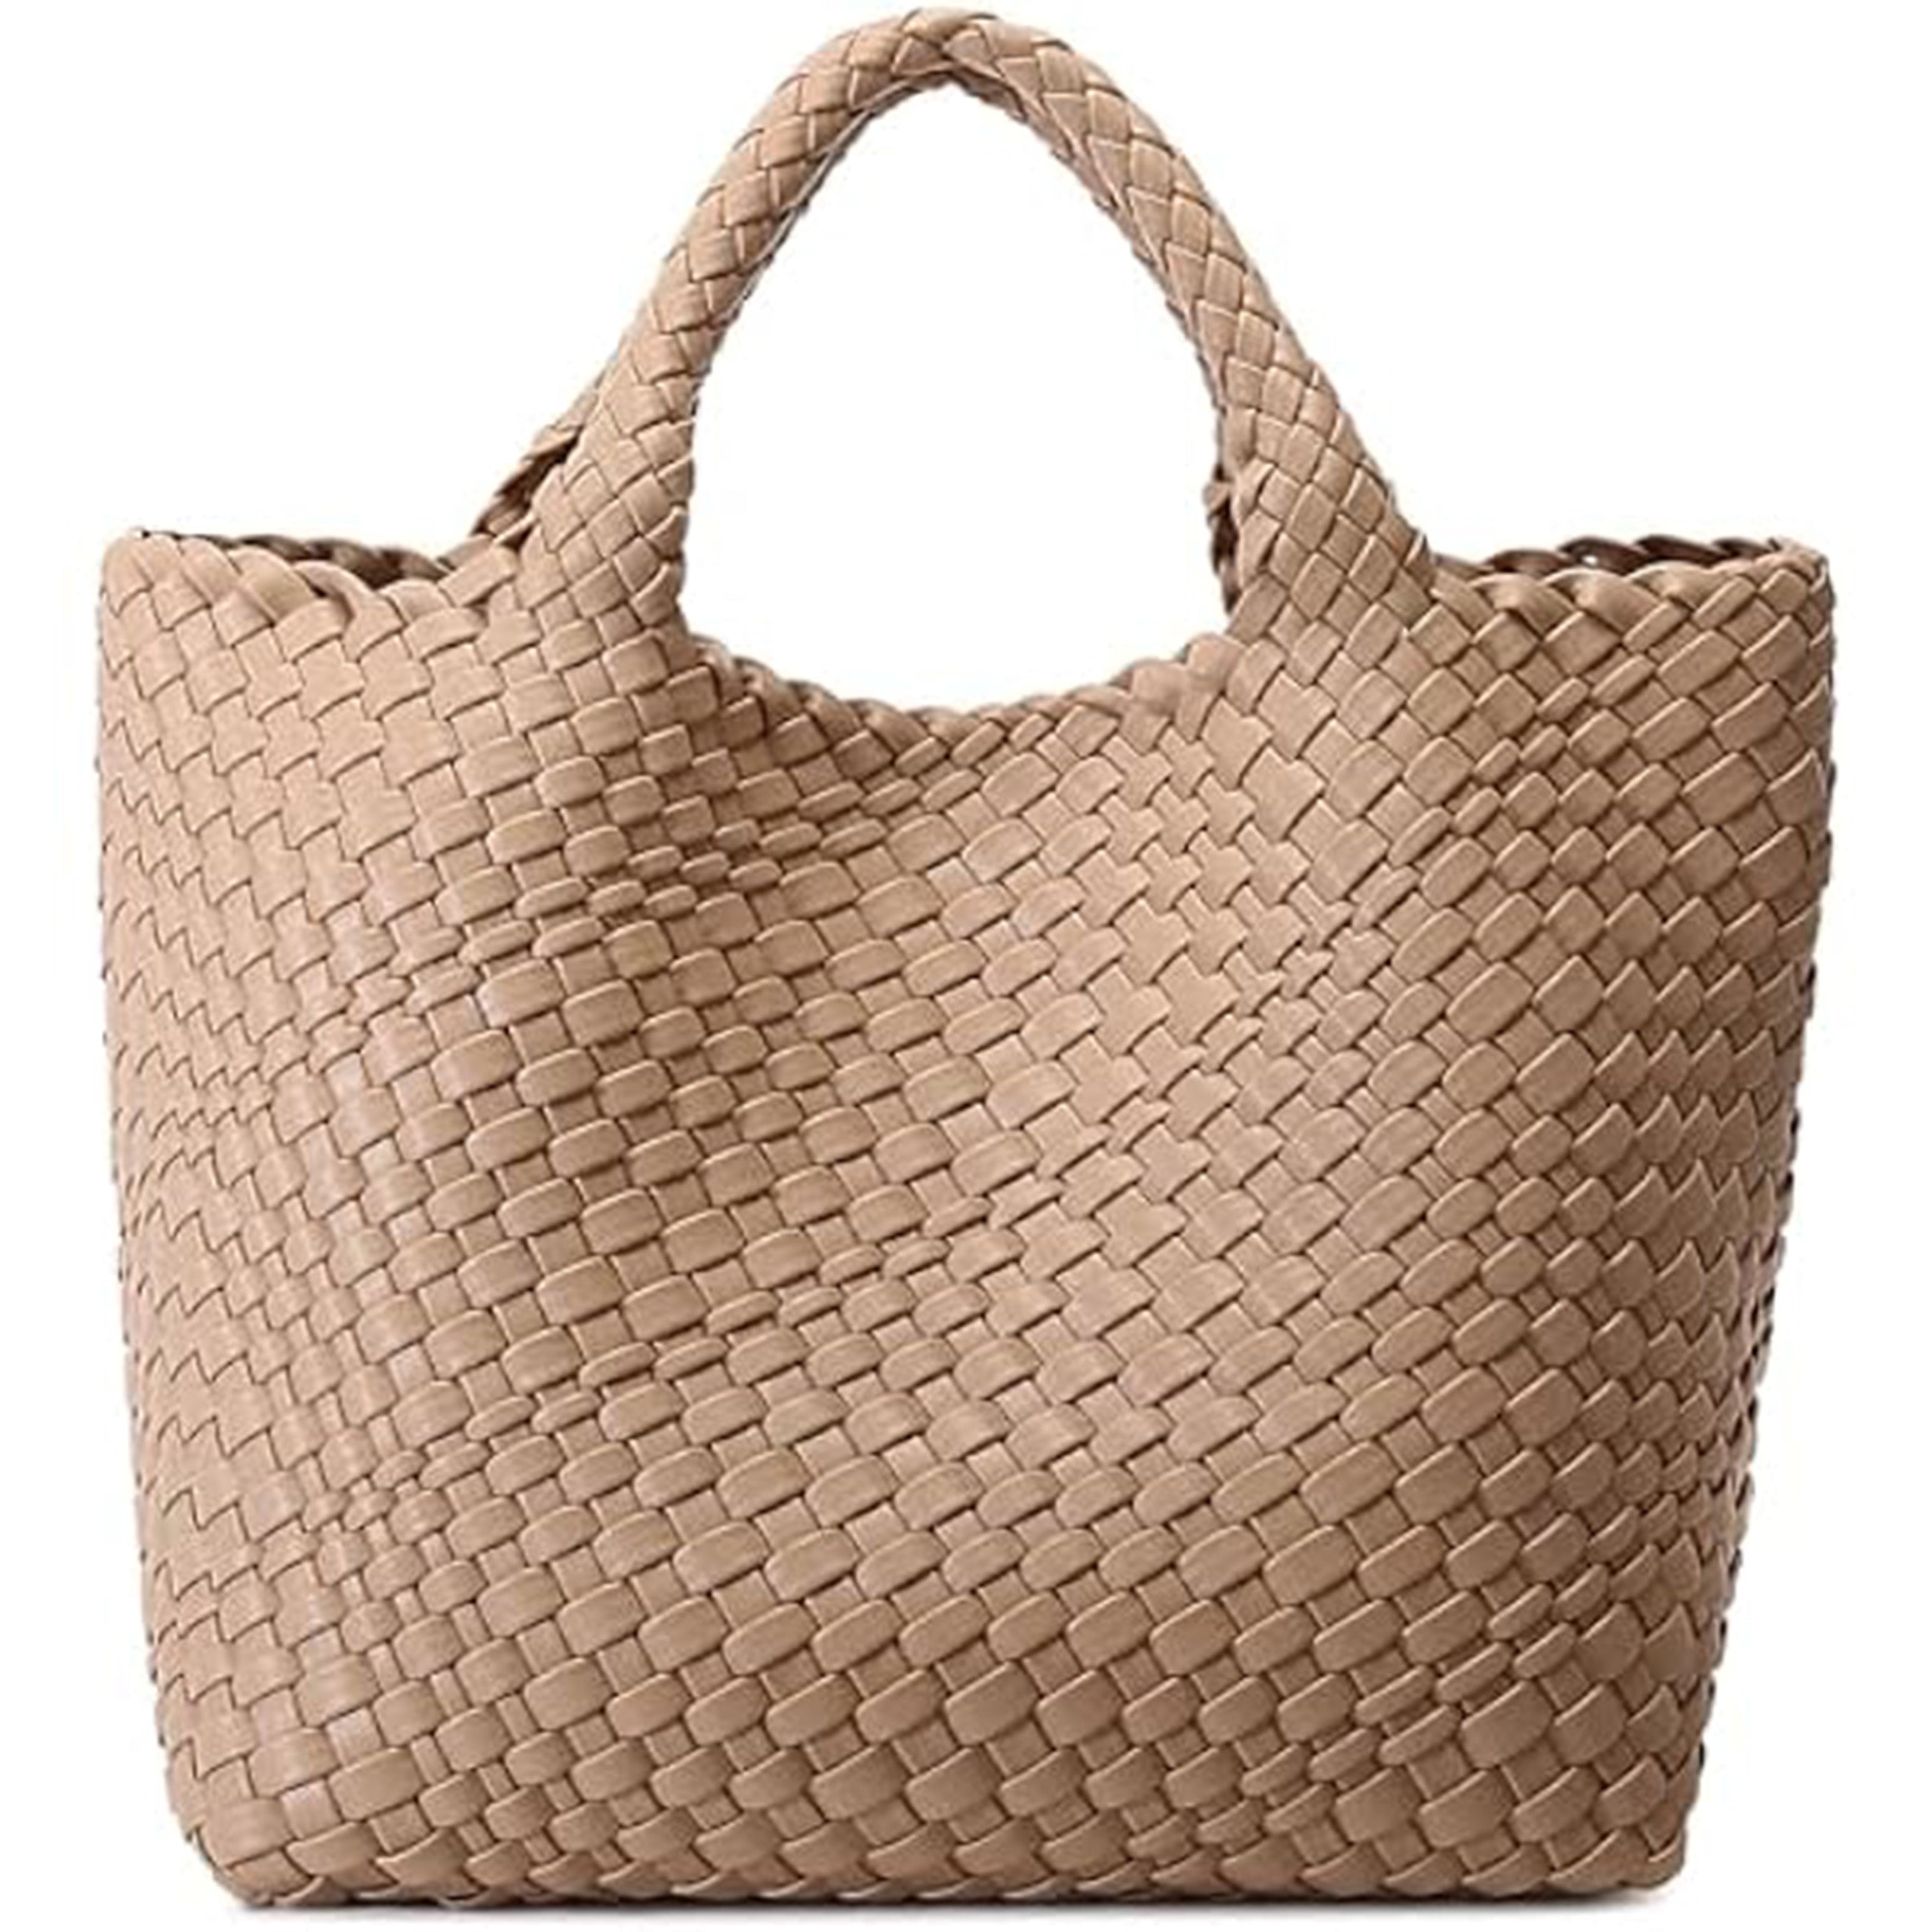 Woven Bag for Women, Vegan Leather Tote Bag Large Summer Beach Travel Handbag and Purse Retro Handmade Shoulder Bag